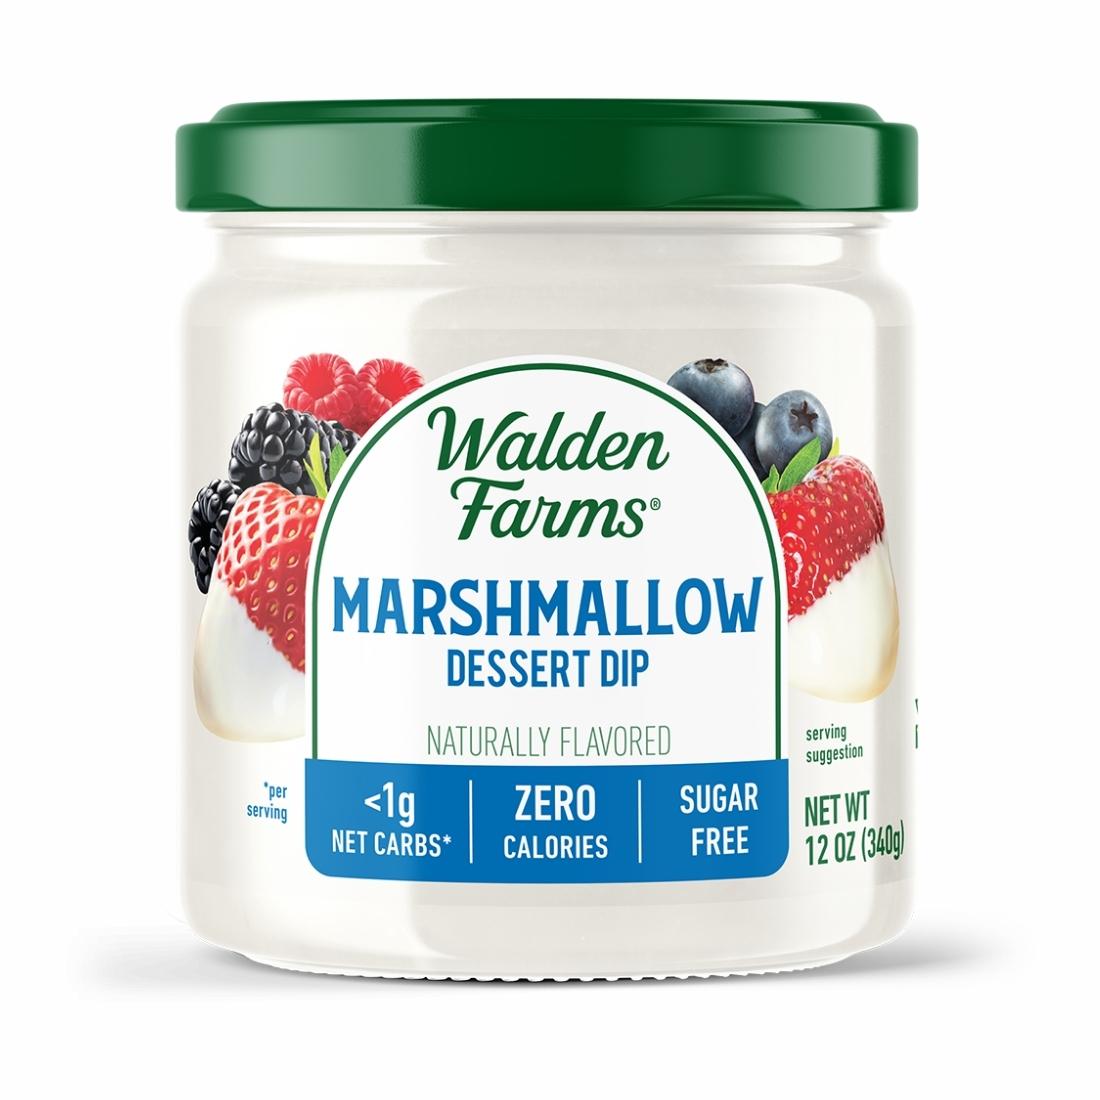 #Flavor_Marshmallow #Size_One Jar